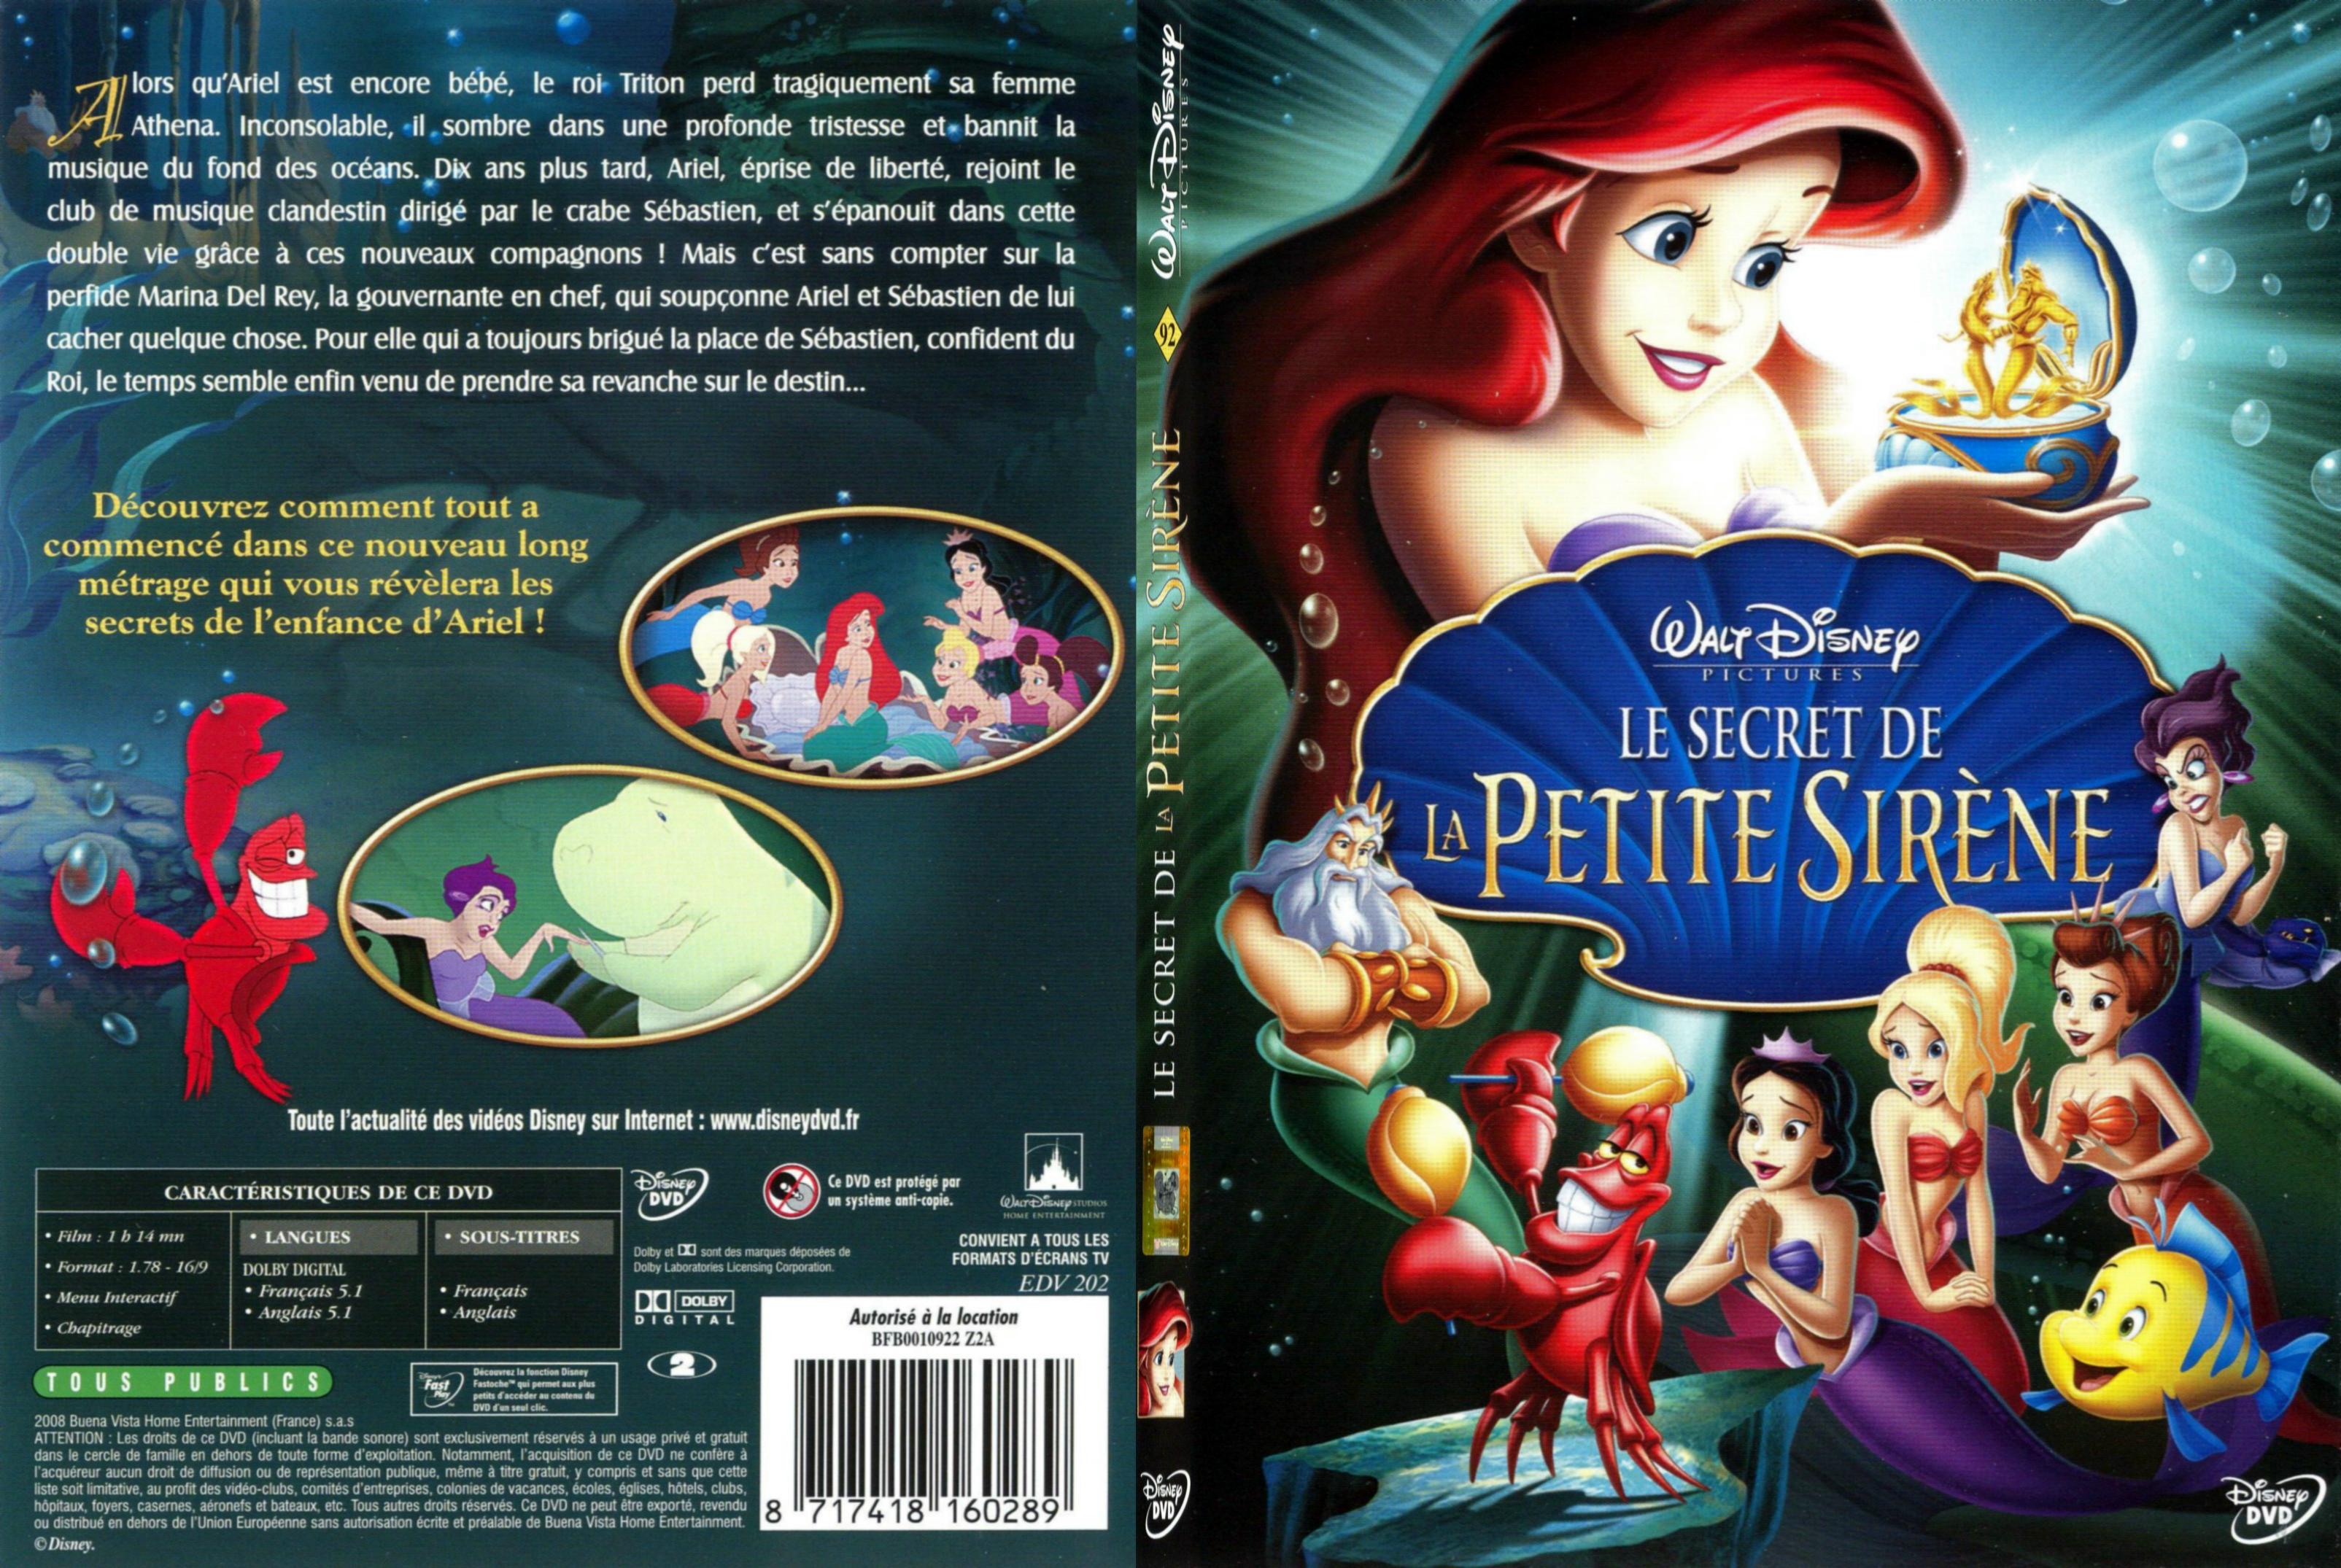 Jaquette DVD Le secret de la petite sirene - SLIM